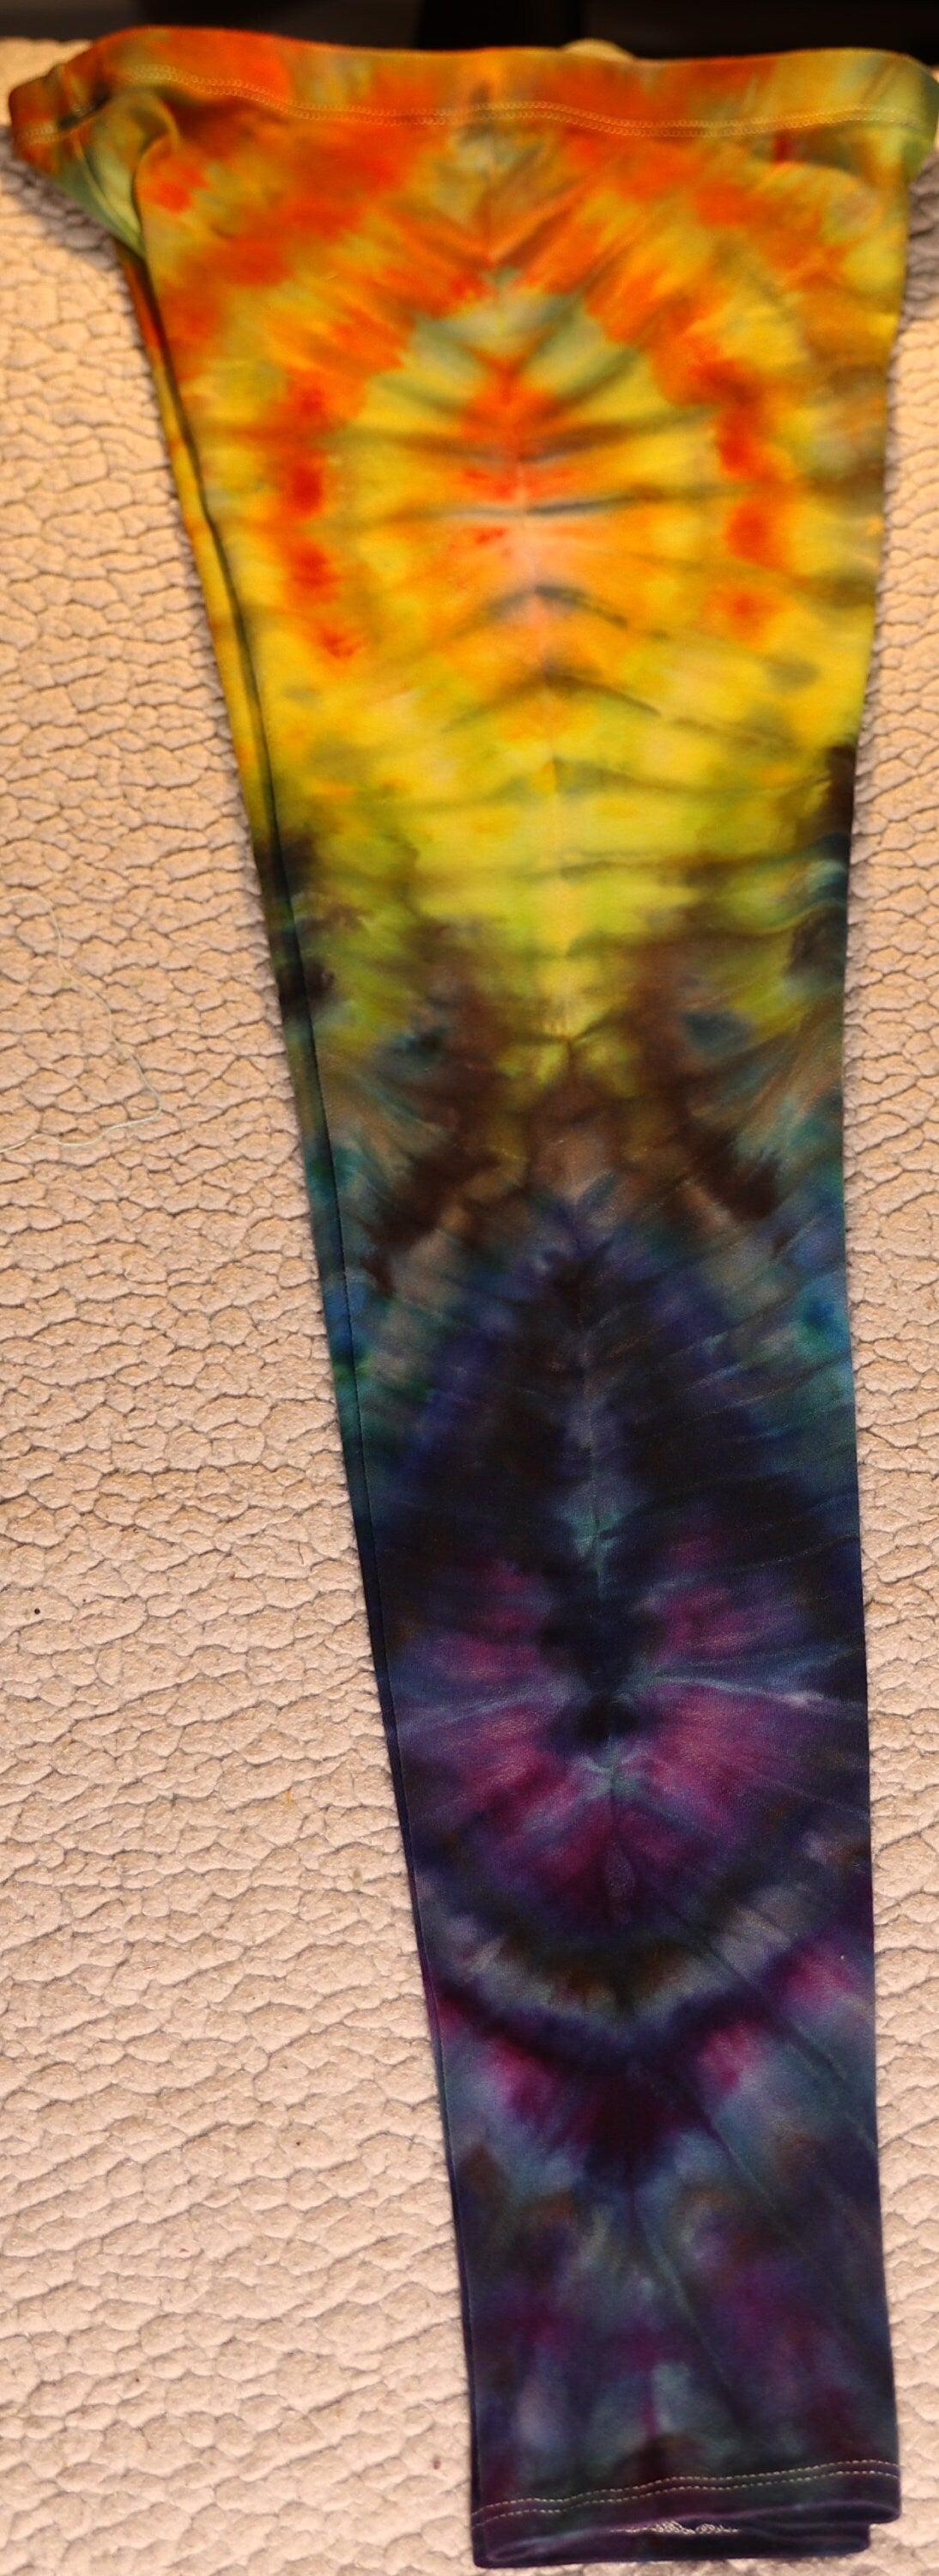 Large Wig Wag Type Ice Dye Tie Dye on Royal Apparel Cotton/Spandex Leggings